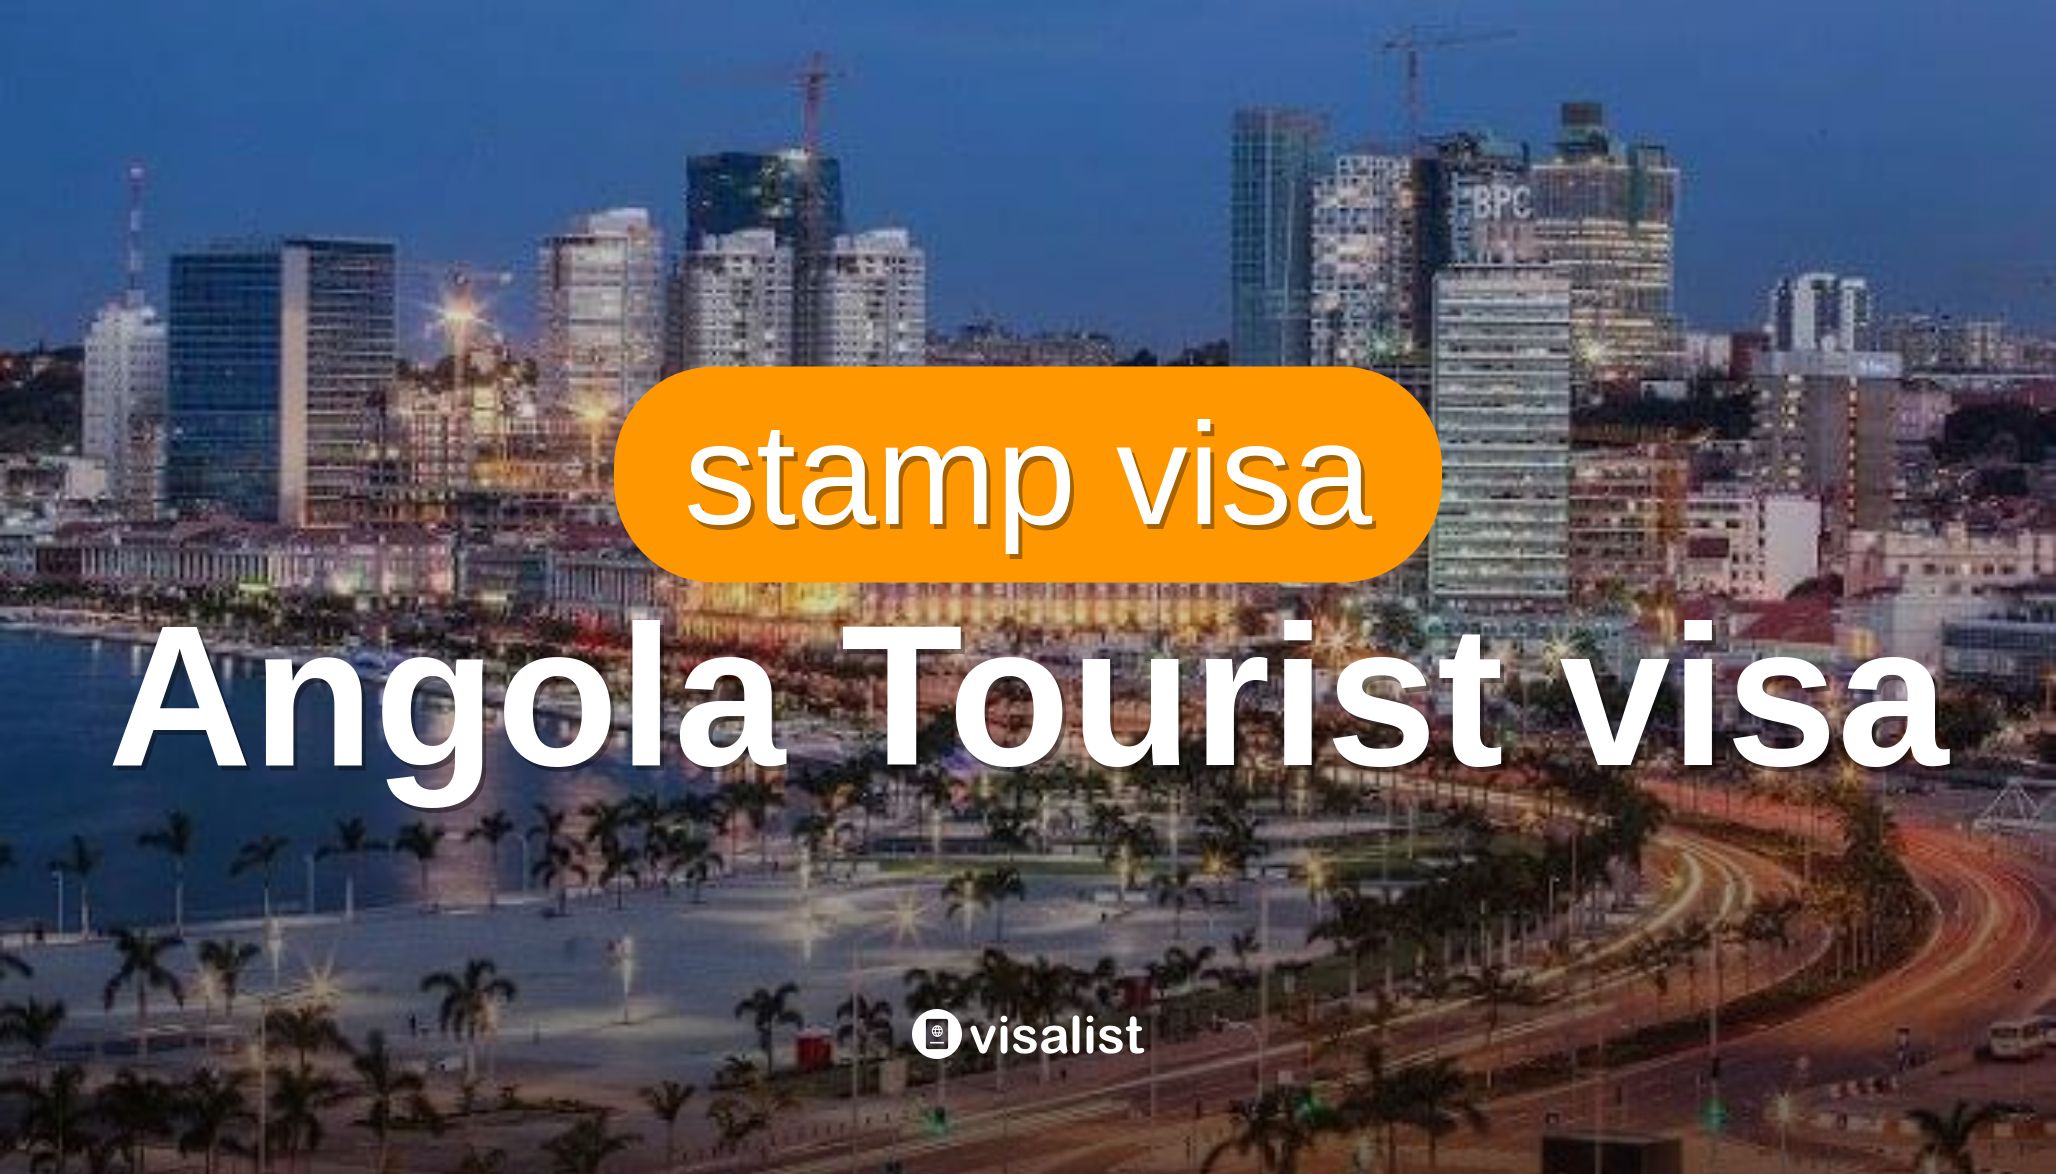 angola tourist requirements